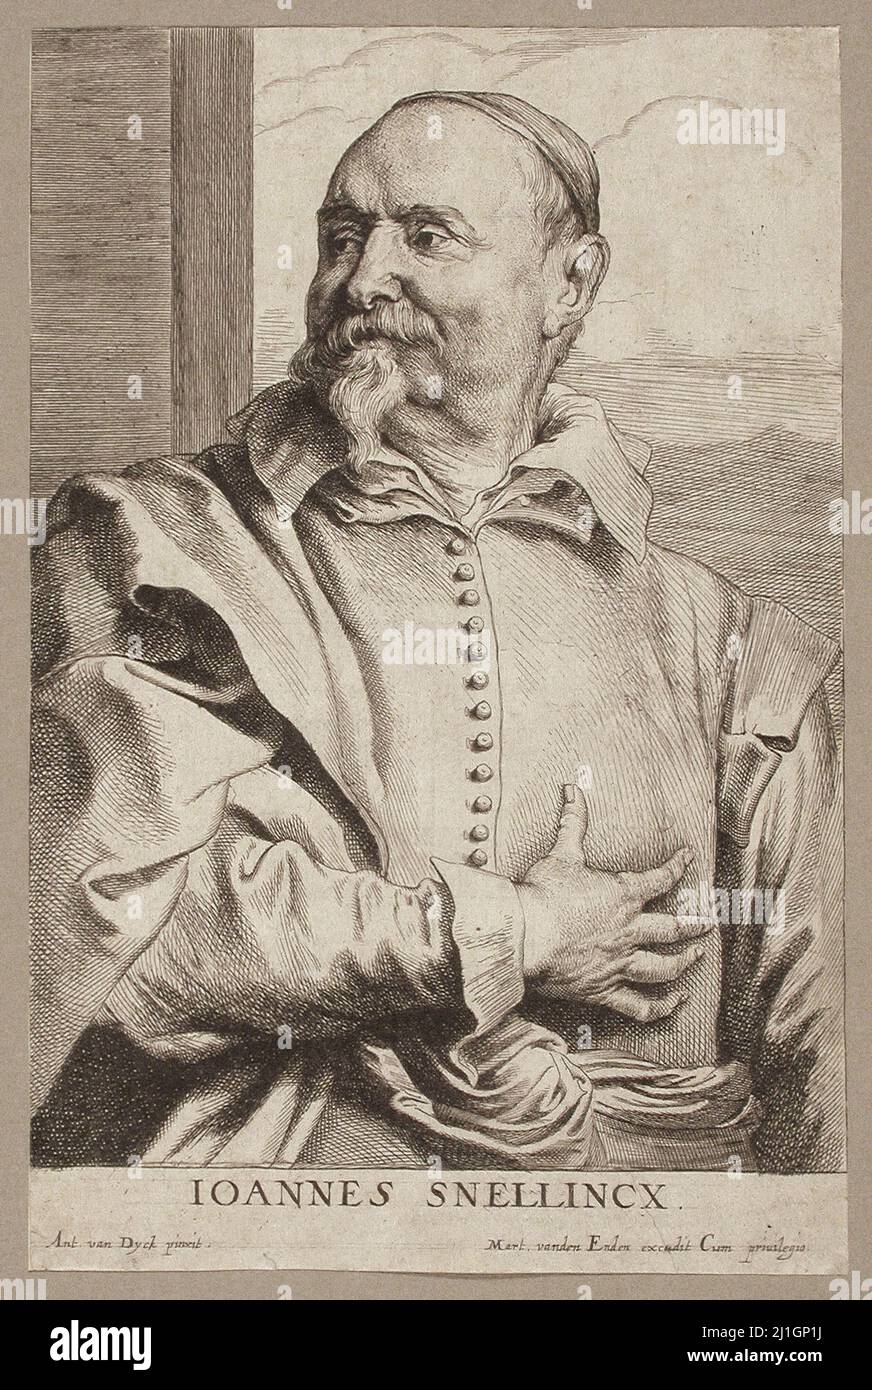 17th-century engraving portrait of Jan Snellinck. By Peter de Jode (1608-1659). Jan Snellinck or Jan Snellinck (c. 1548 – 1638) was a Flemish painter, Stock Photo